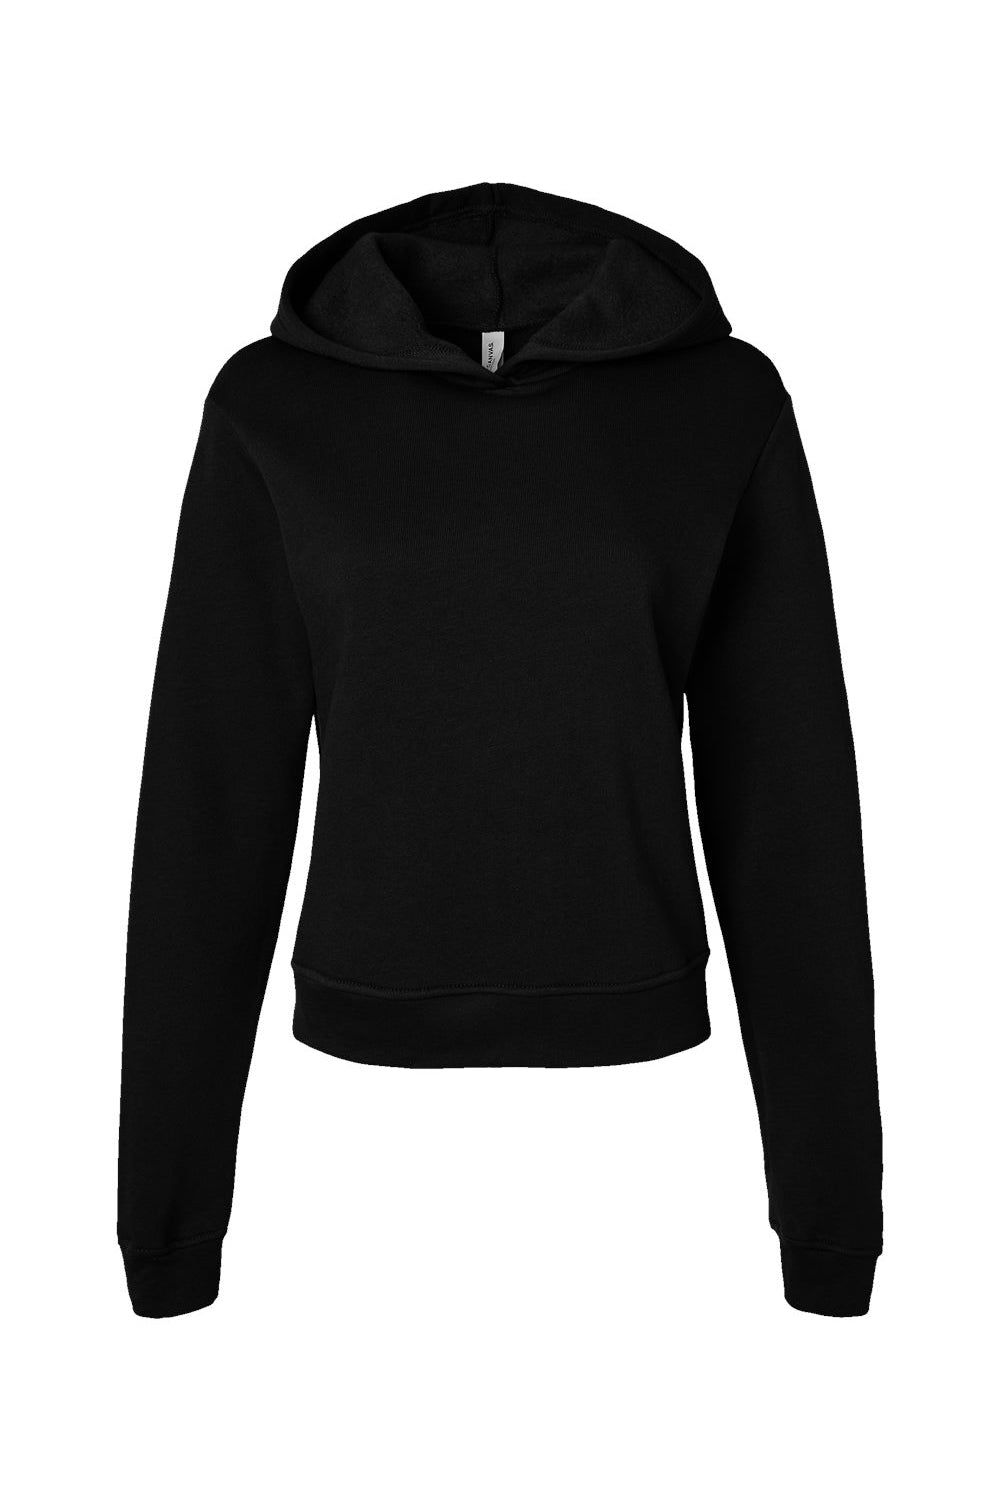 Bella + Canvas 7519 Womens Classic Hooded Sweatshirt Hoodie Black Flat Front